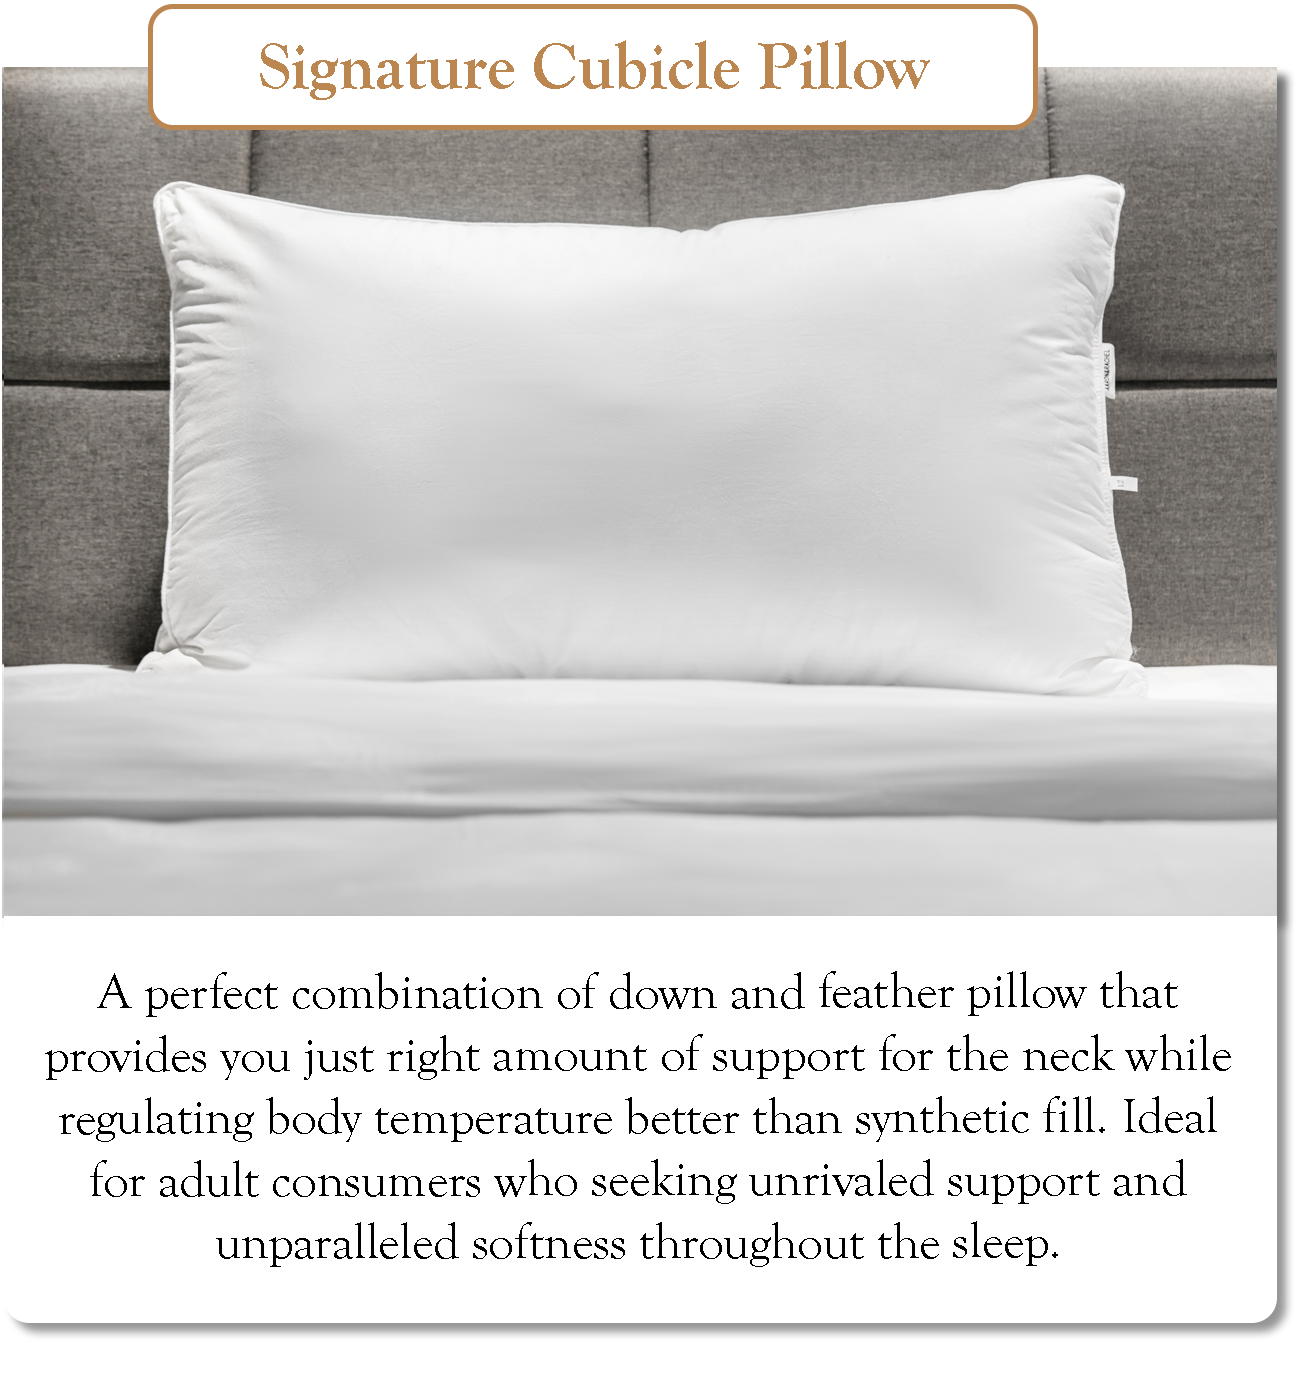 Signature Cubicle Pillow